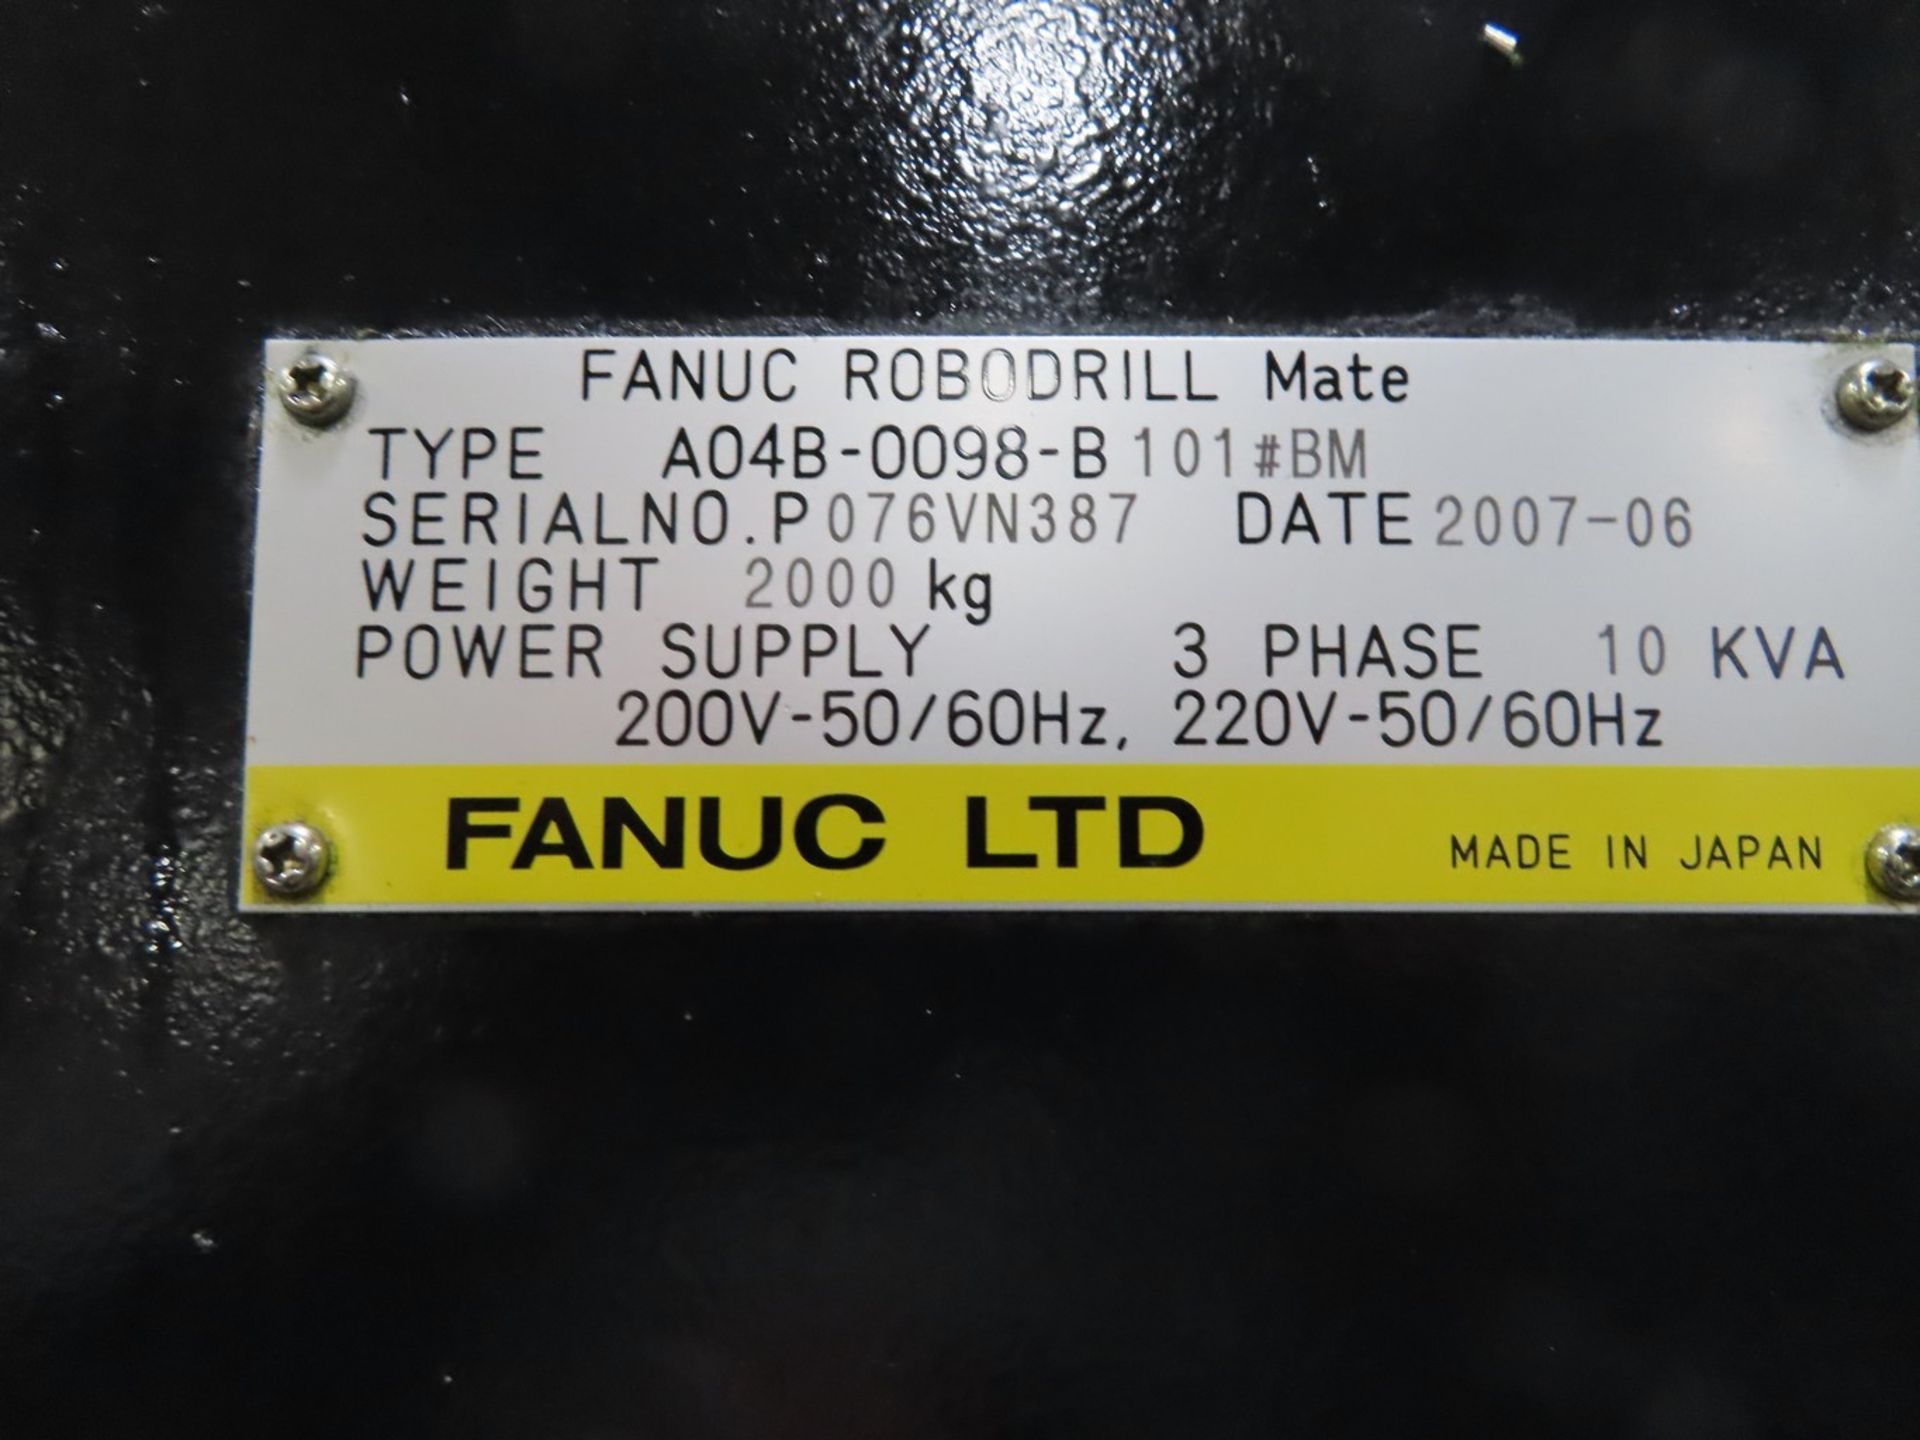 2008 Fanuc Robodrill-Mate CNC Vertical Machining Center - Image 5 of 5